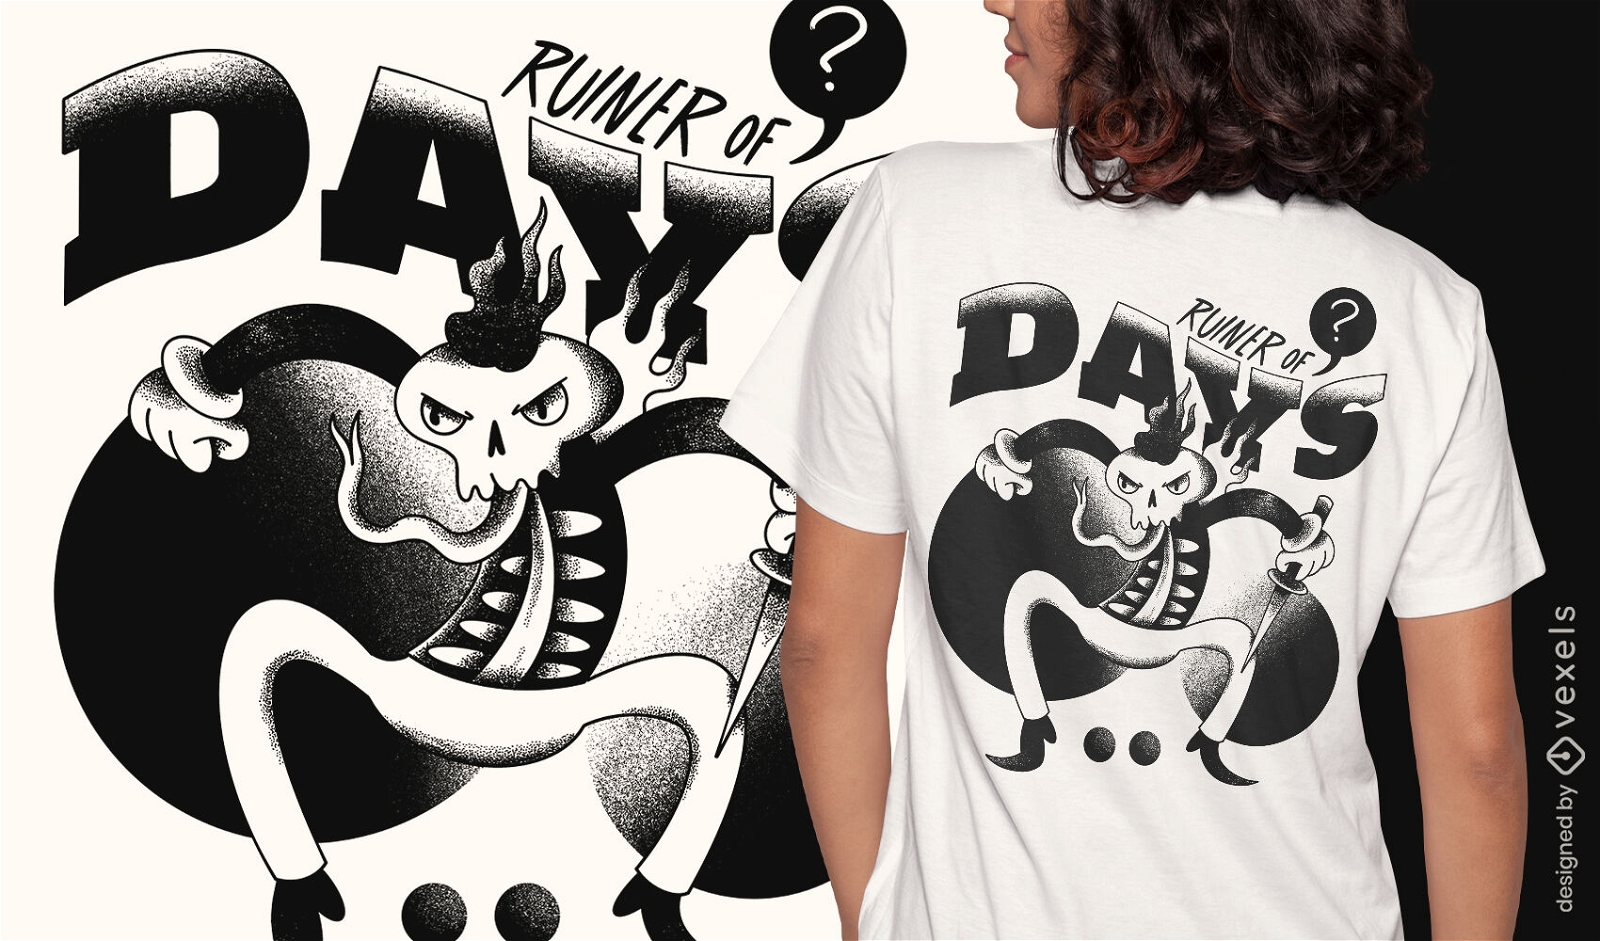 Ruiner of Days B?sewicht-T-Shirt-Design